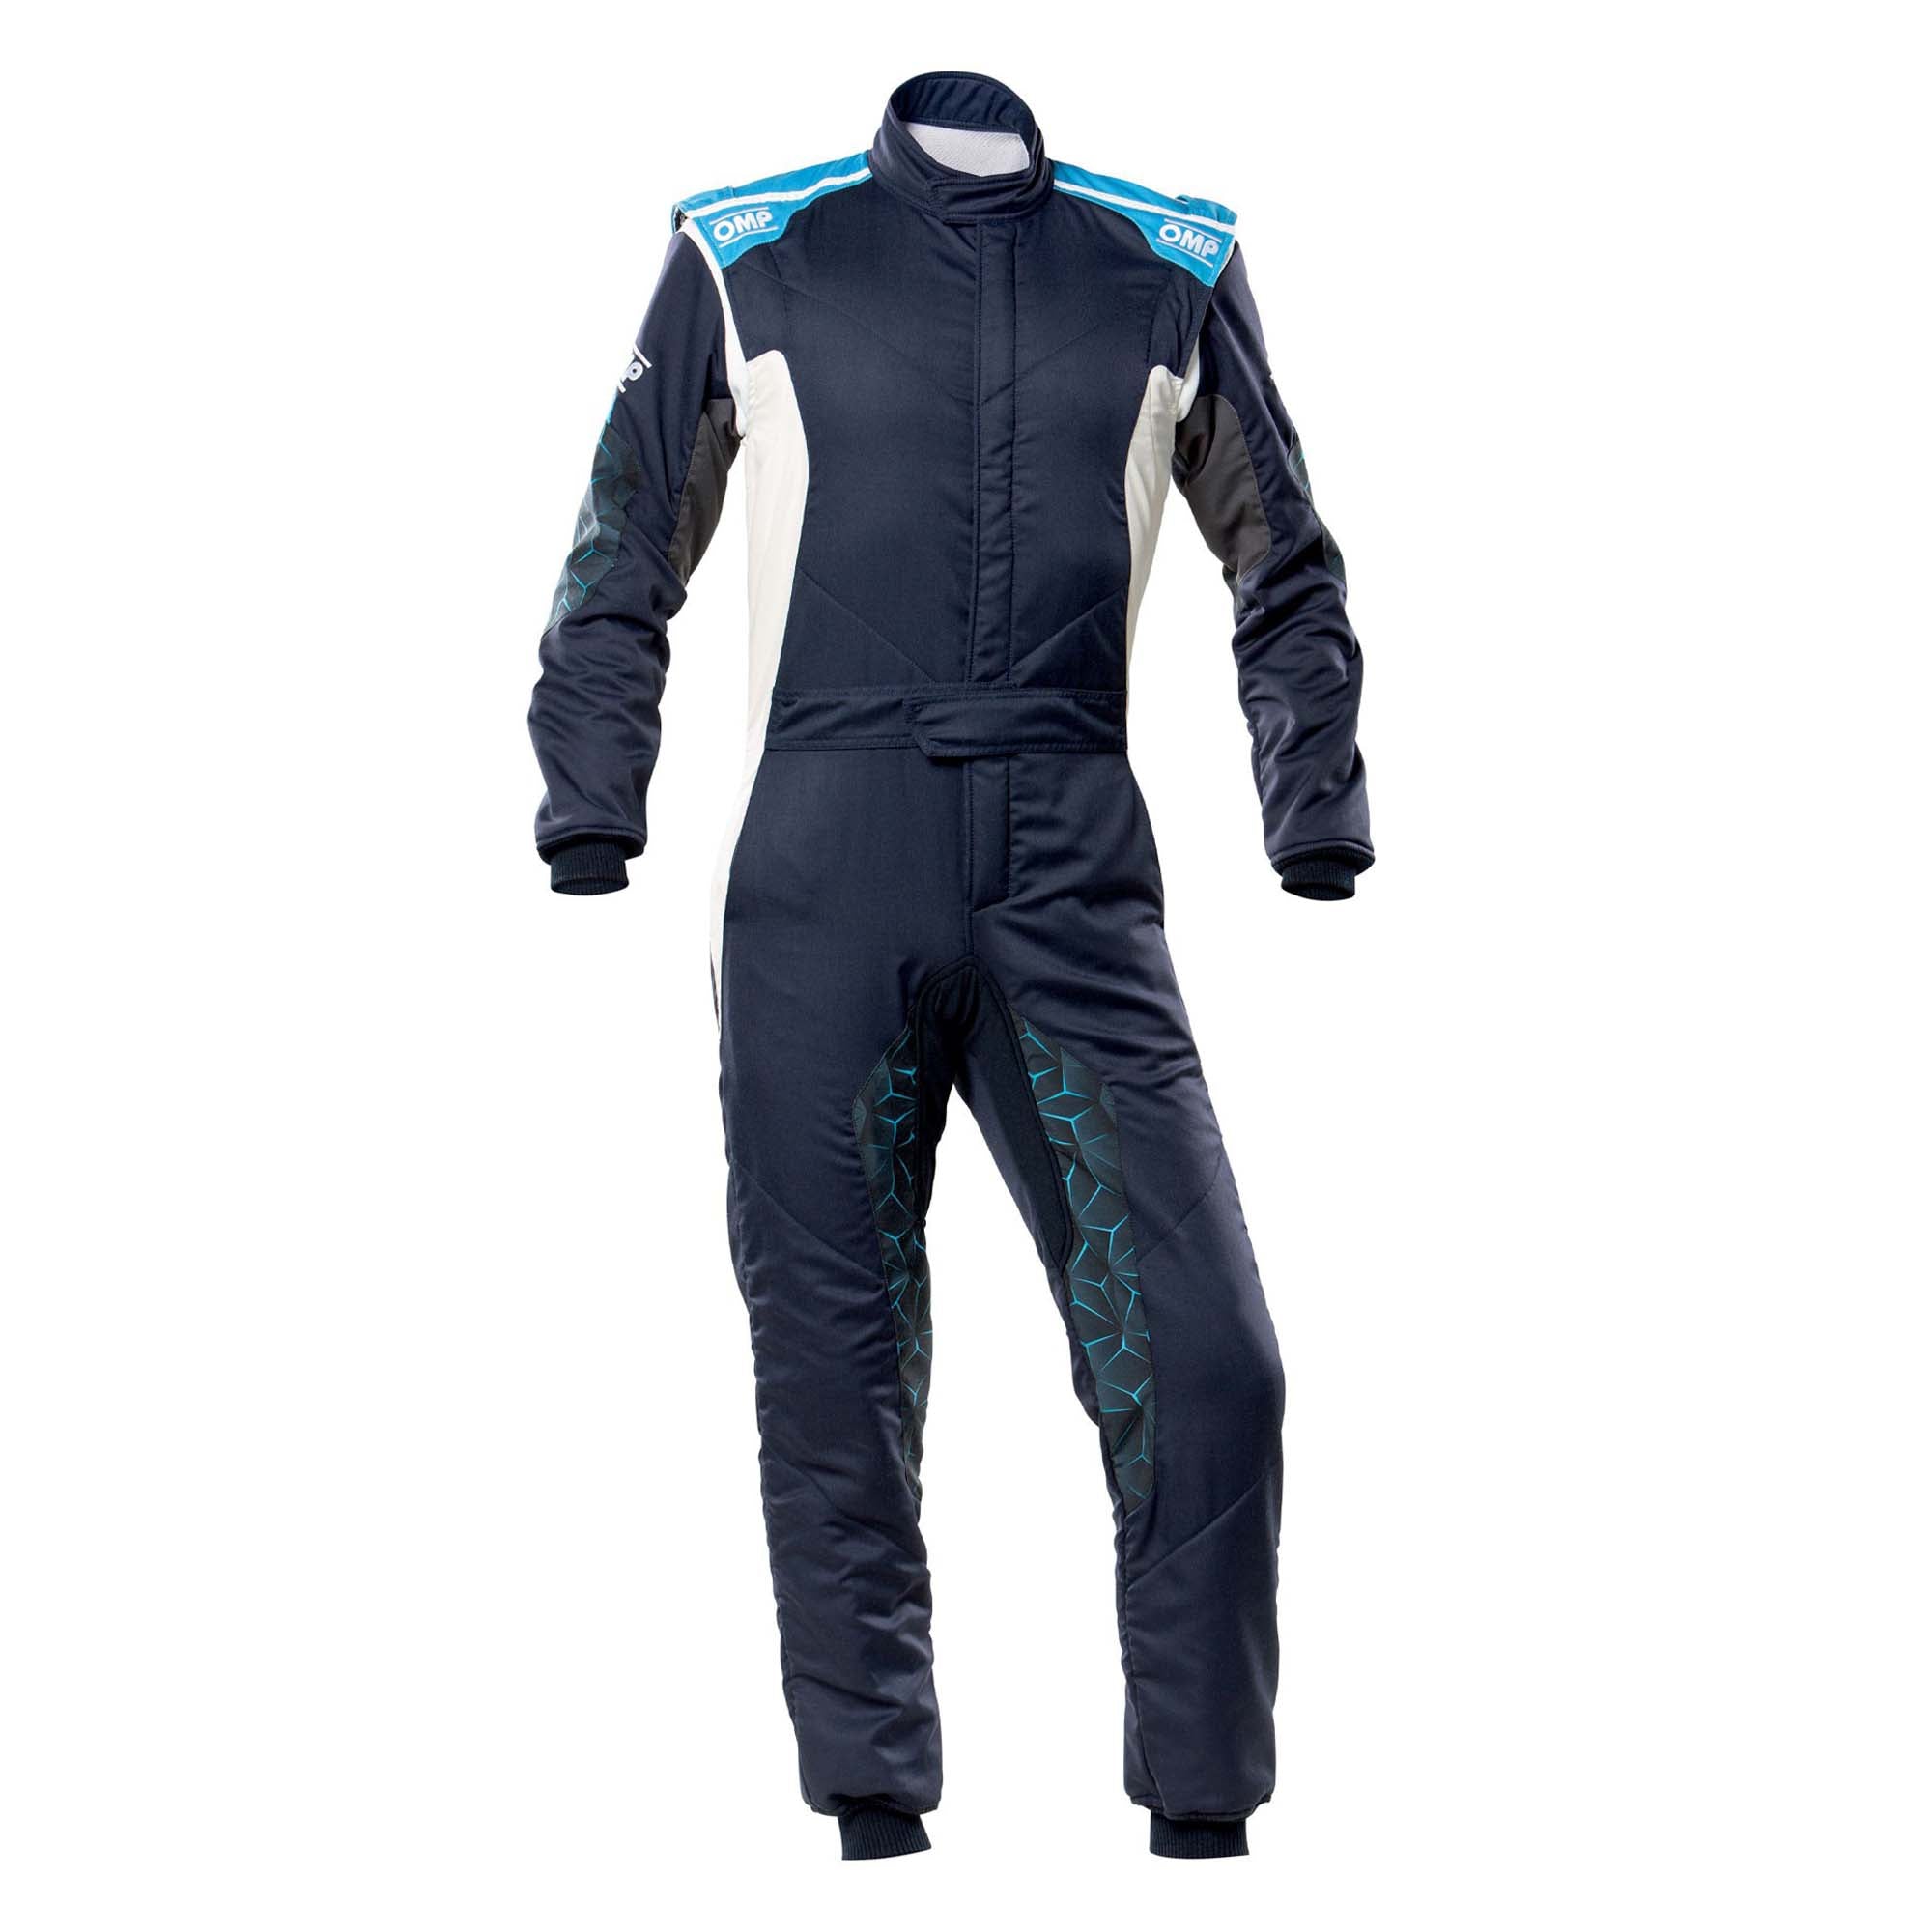 OMP Tecnica Hybrid Racing Suit - Navy/Cyan